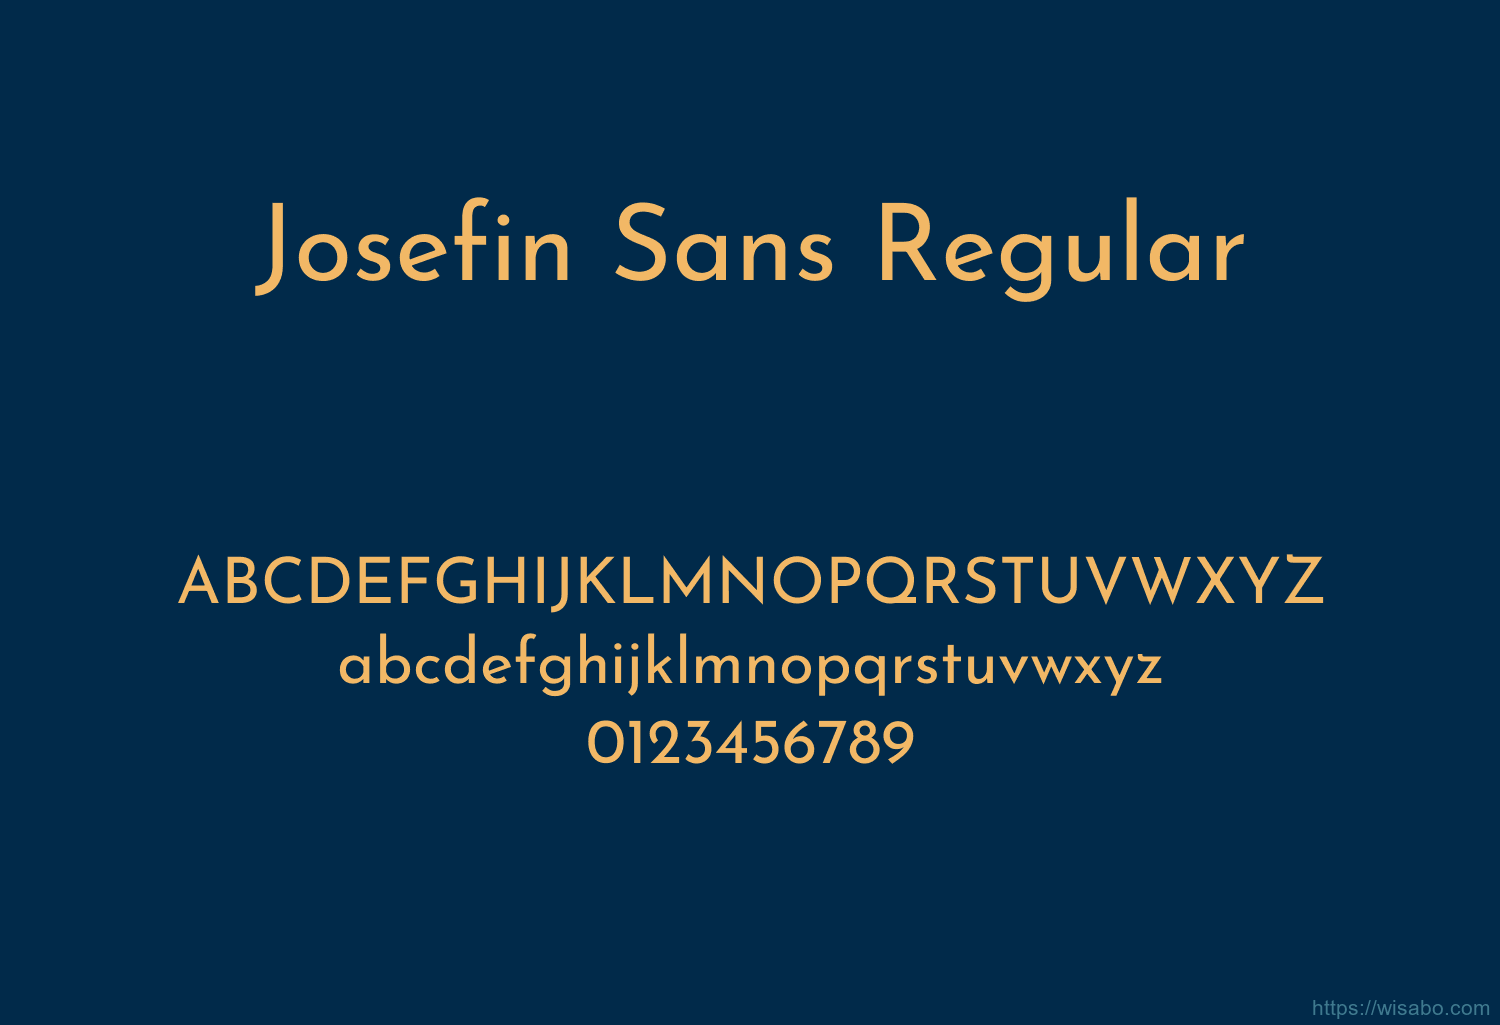 Josefin Sans Regular